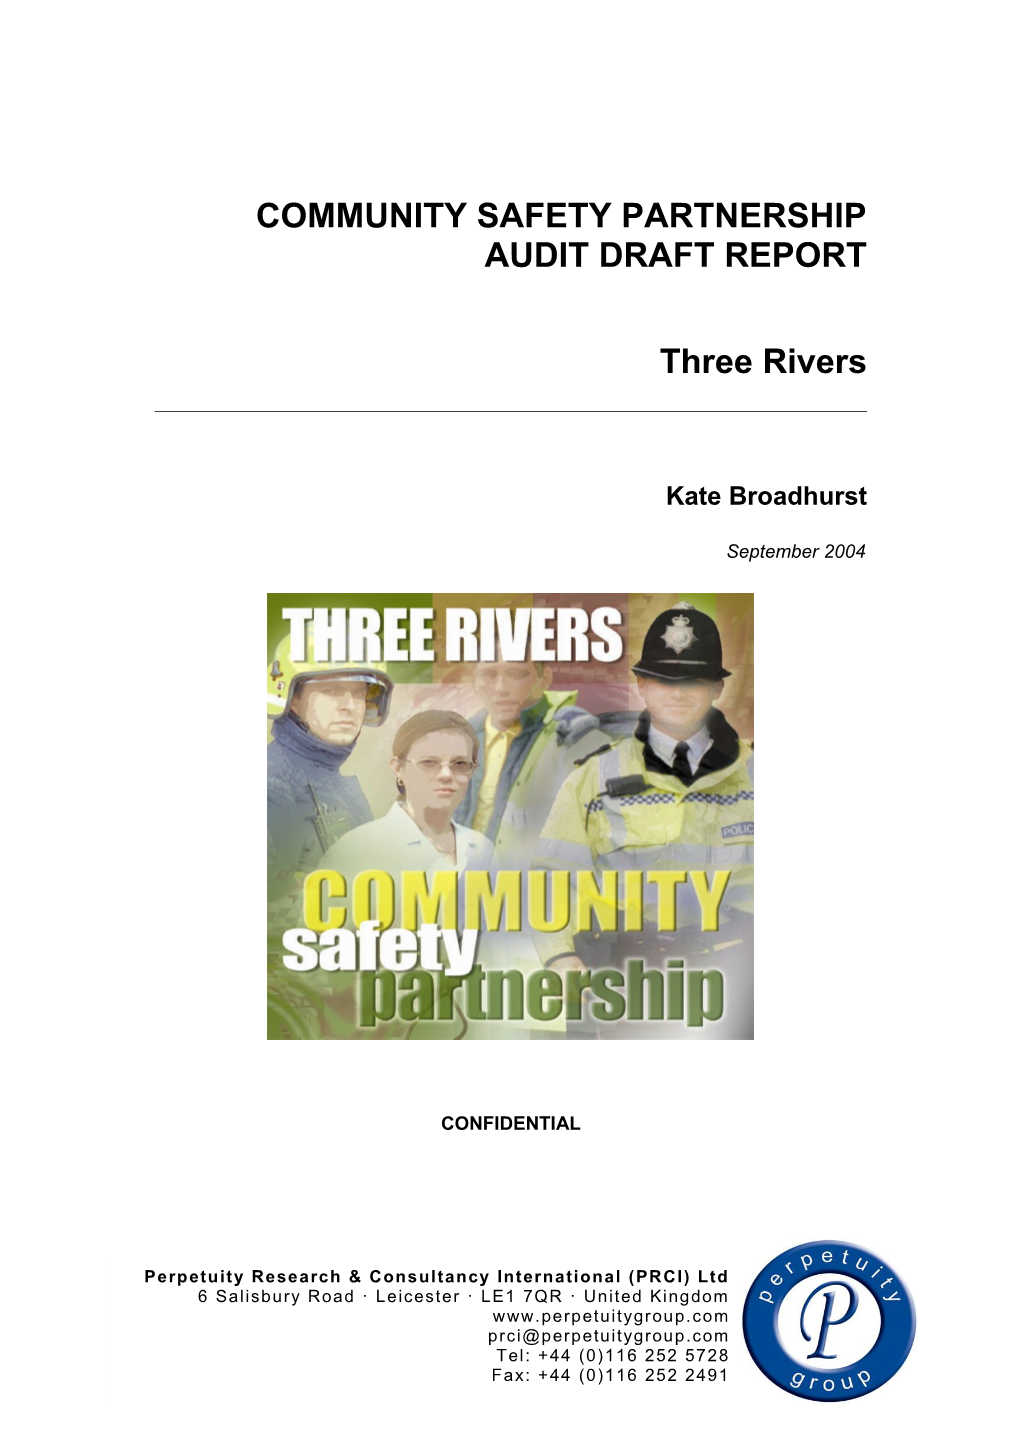 Community Safety Partnership Audit Draft Report